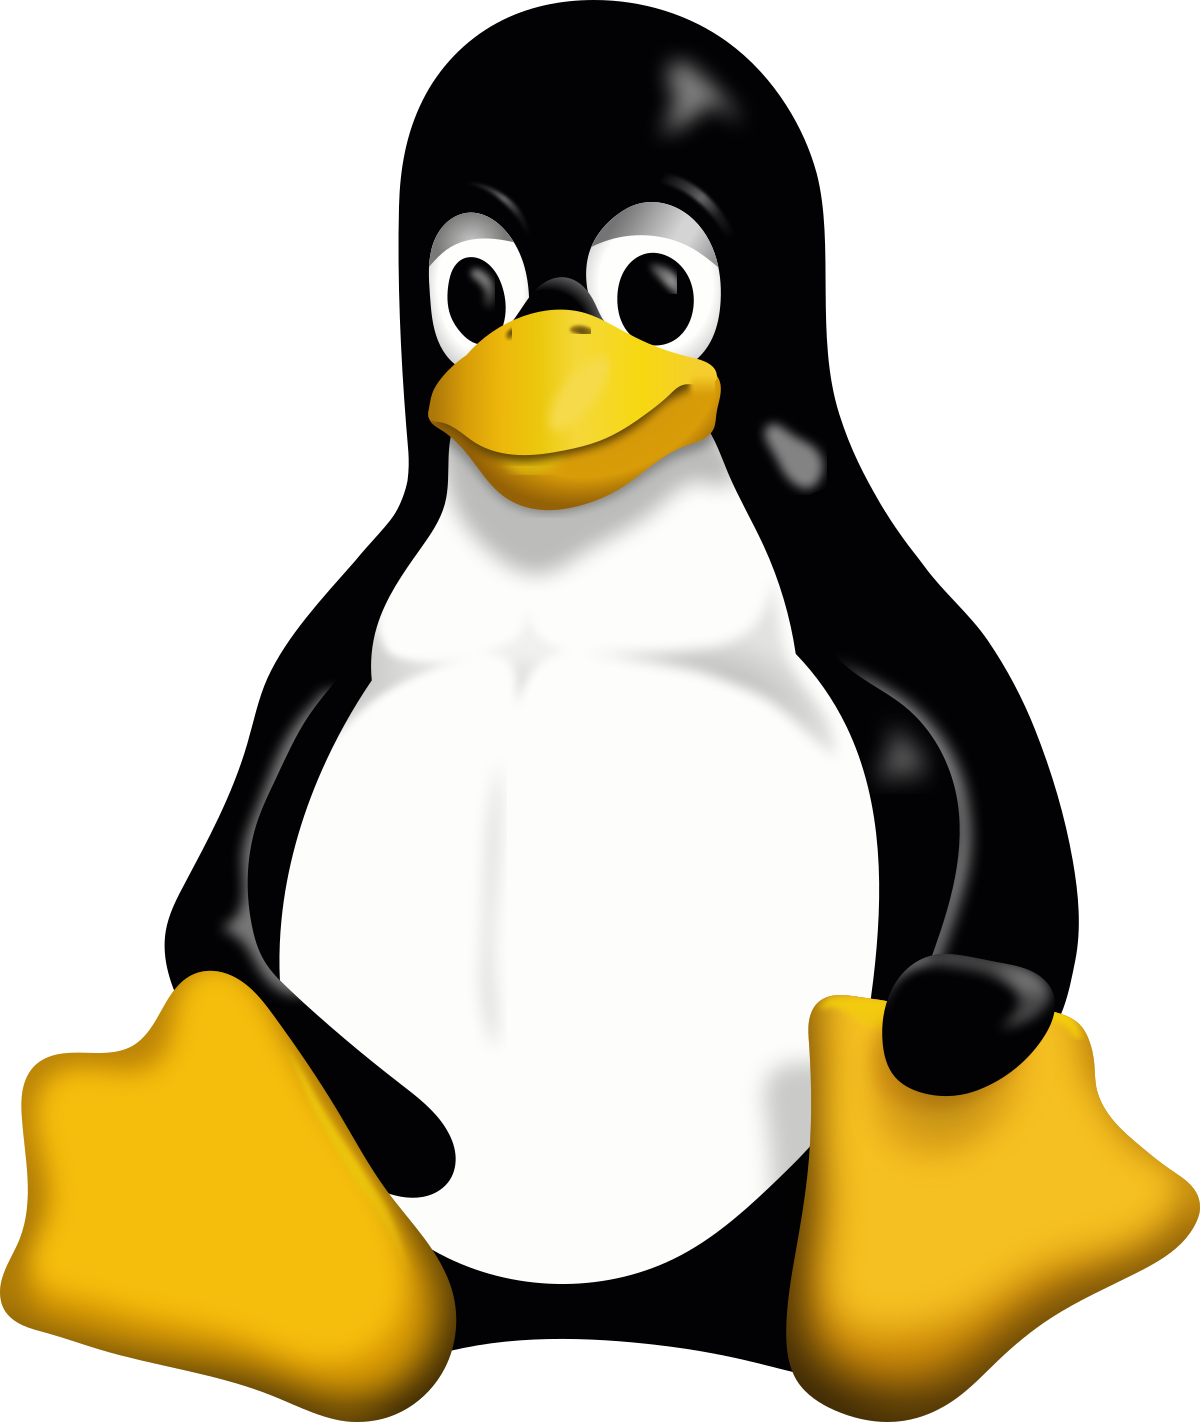 The Linux mascot Tux the Penguin